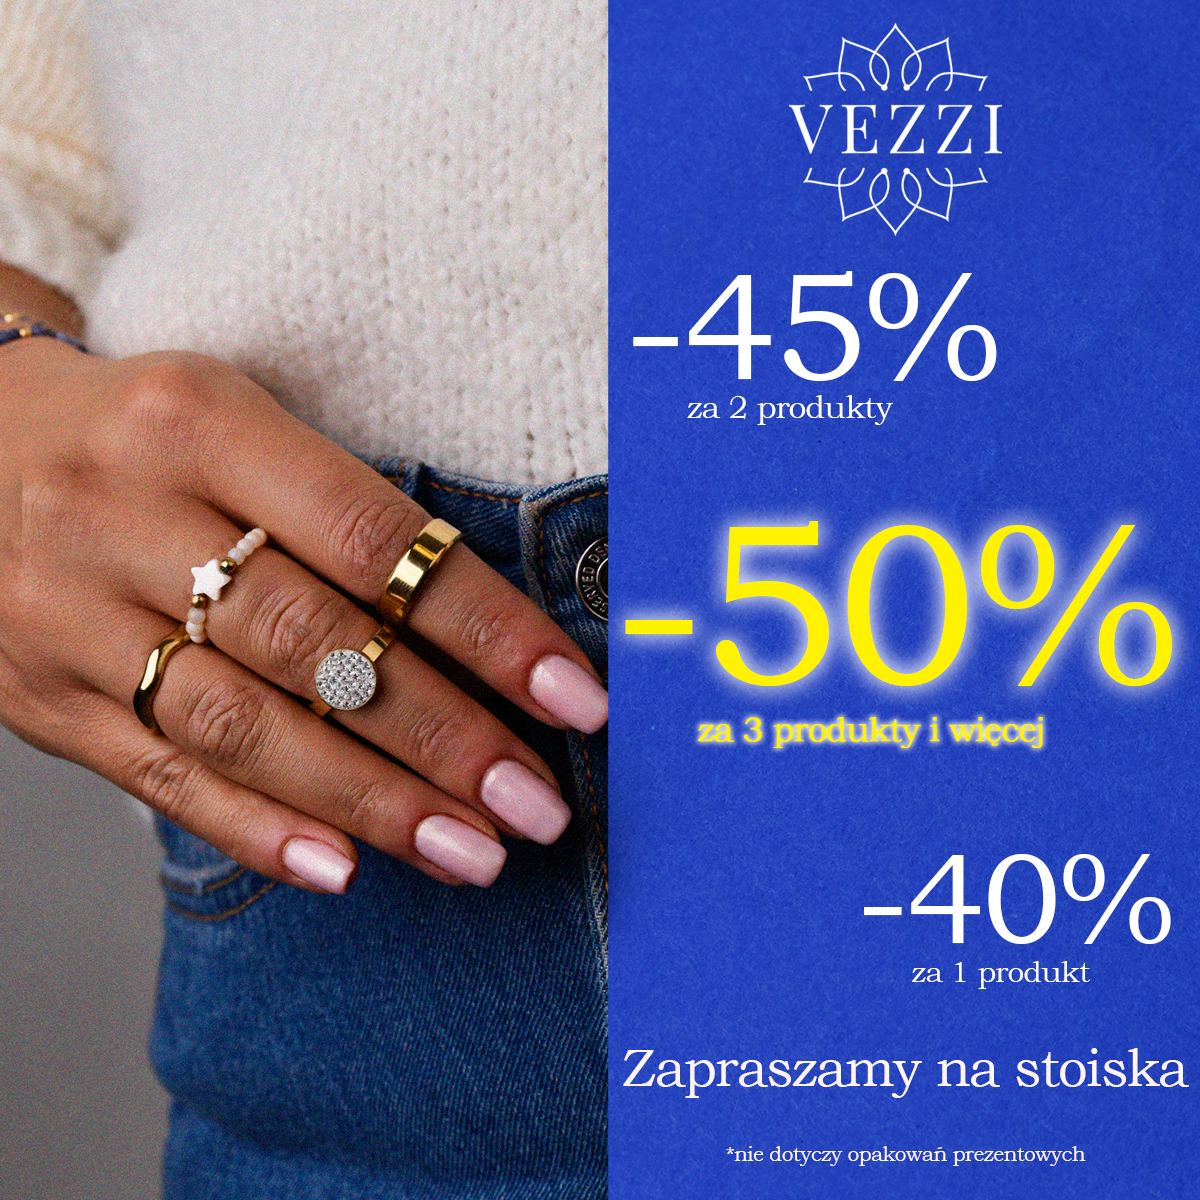 Biżuteria Vezzi – MEGA RABATY do -50%